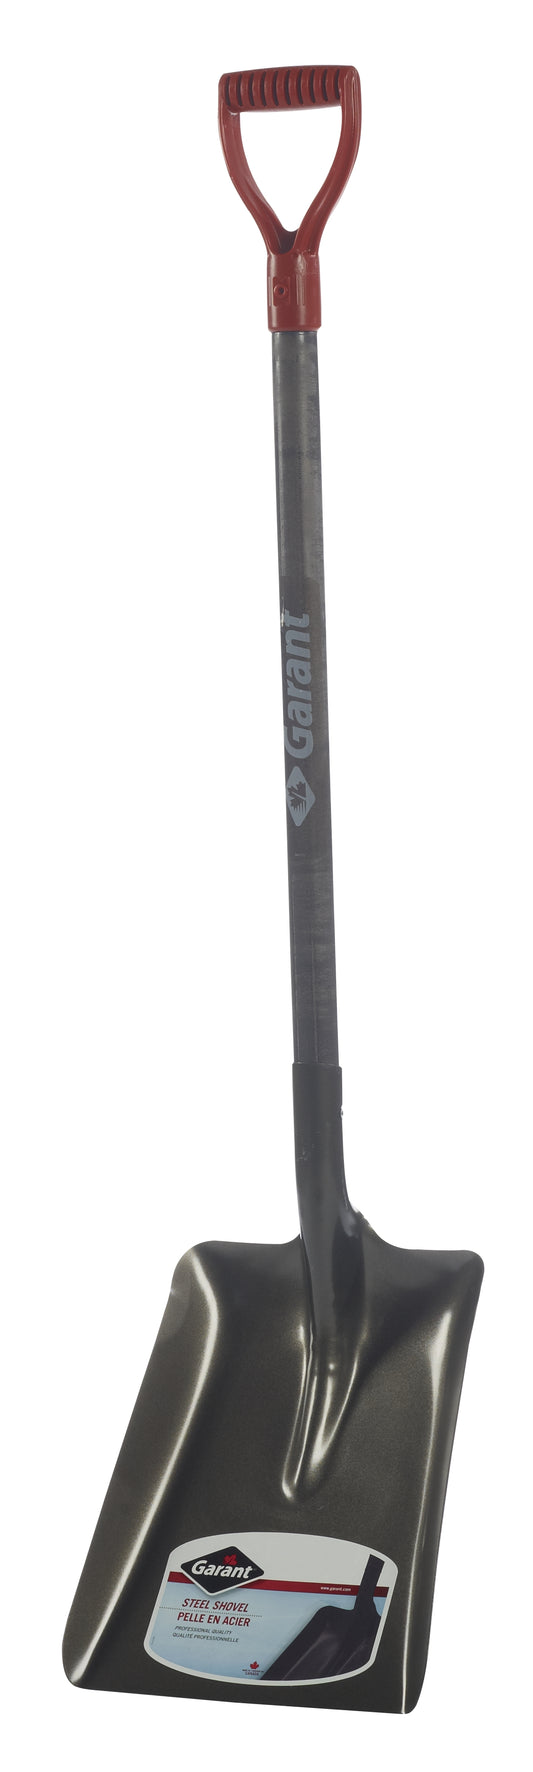 Snow shovel, steel 11.5-Inch blade